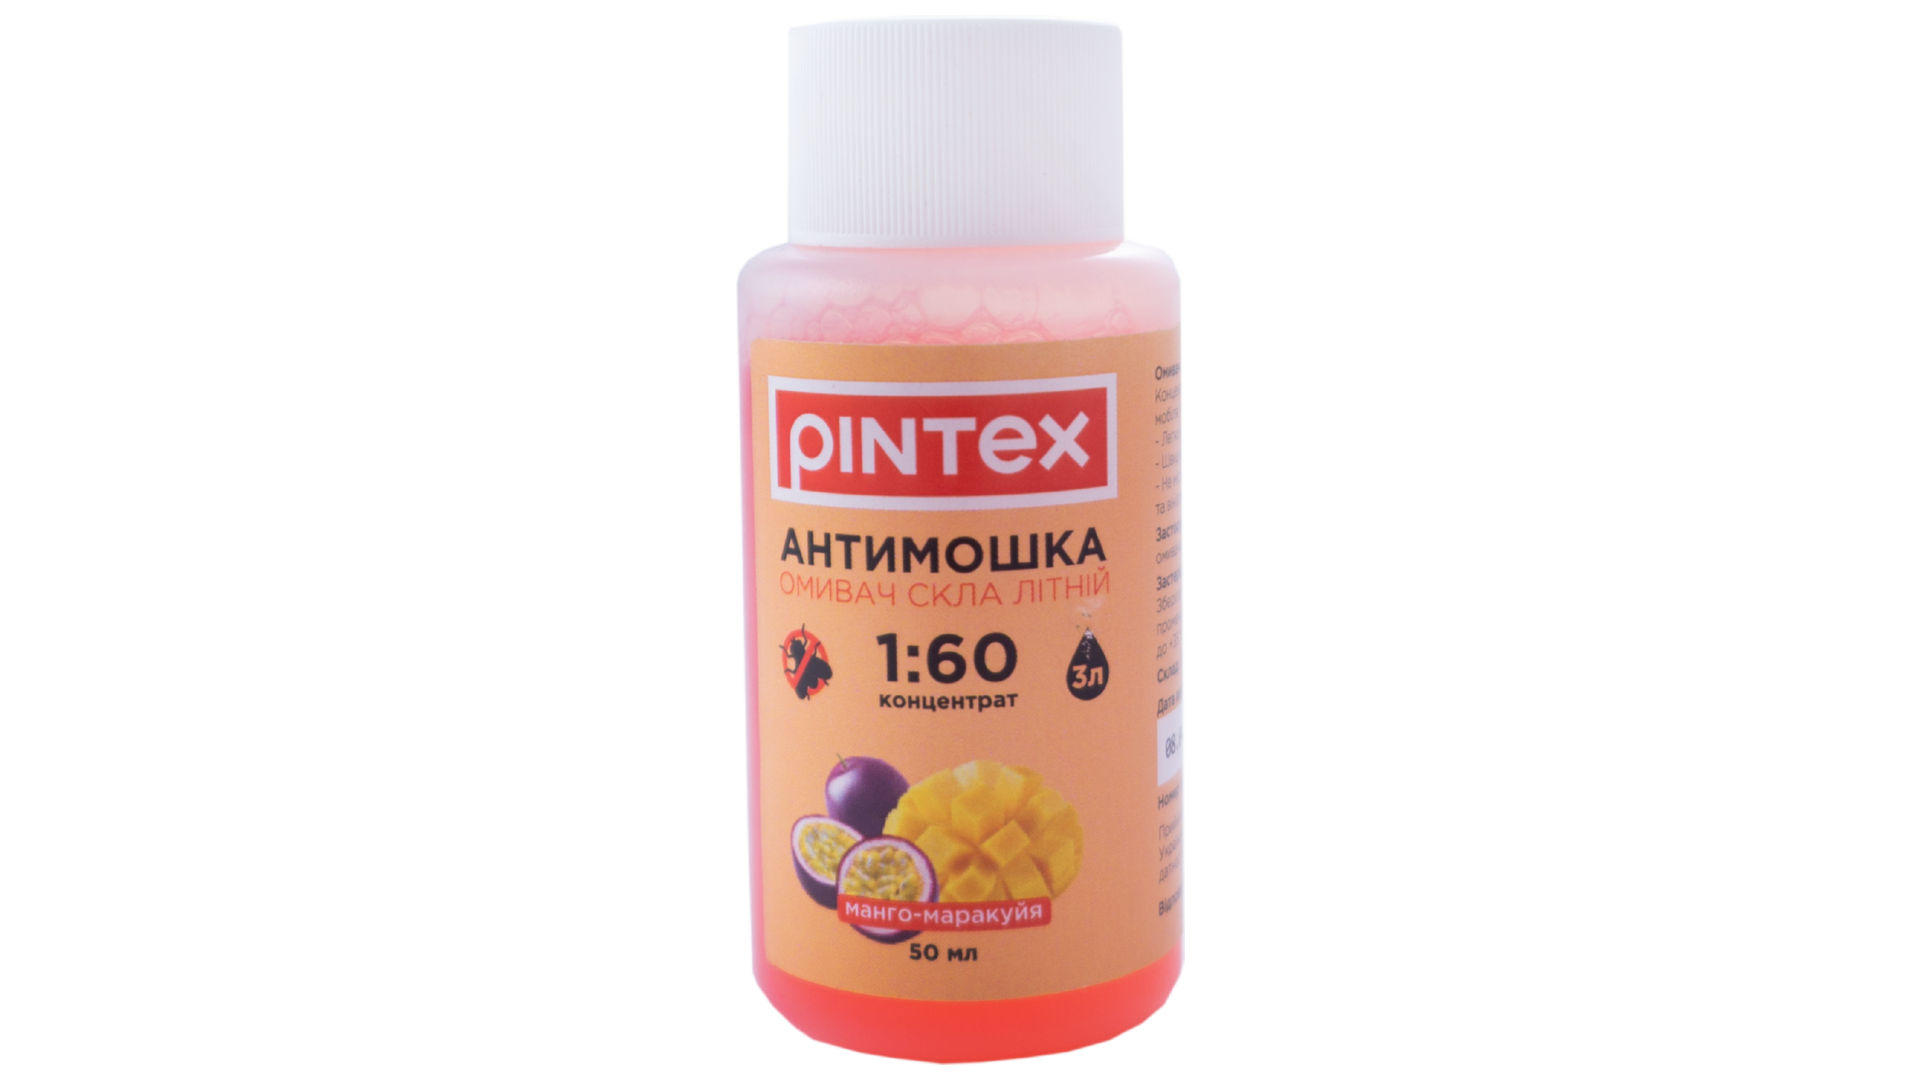 Омыватель стекла антимошка Pintex - 50 мл 1:60 манго-маракуйя 3